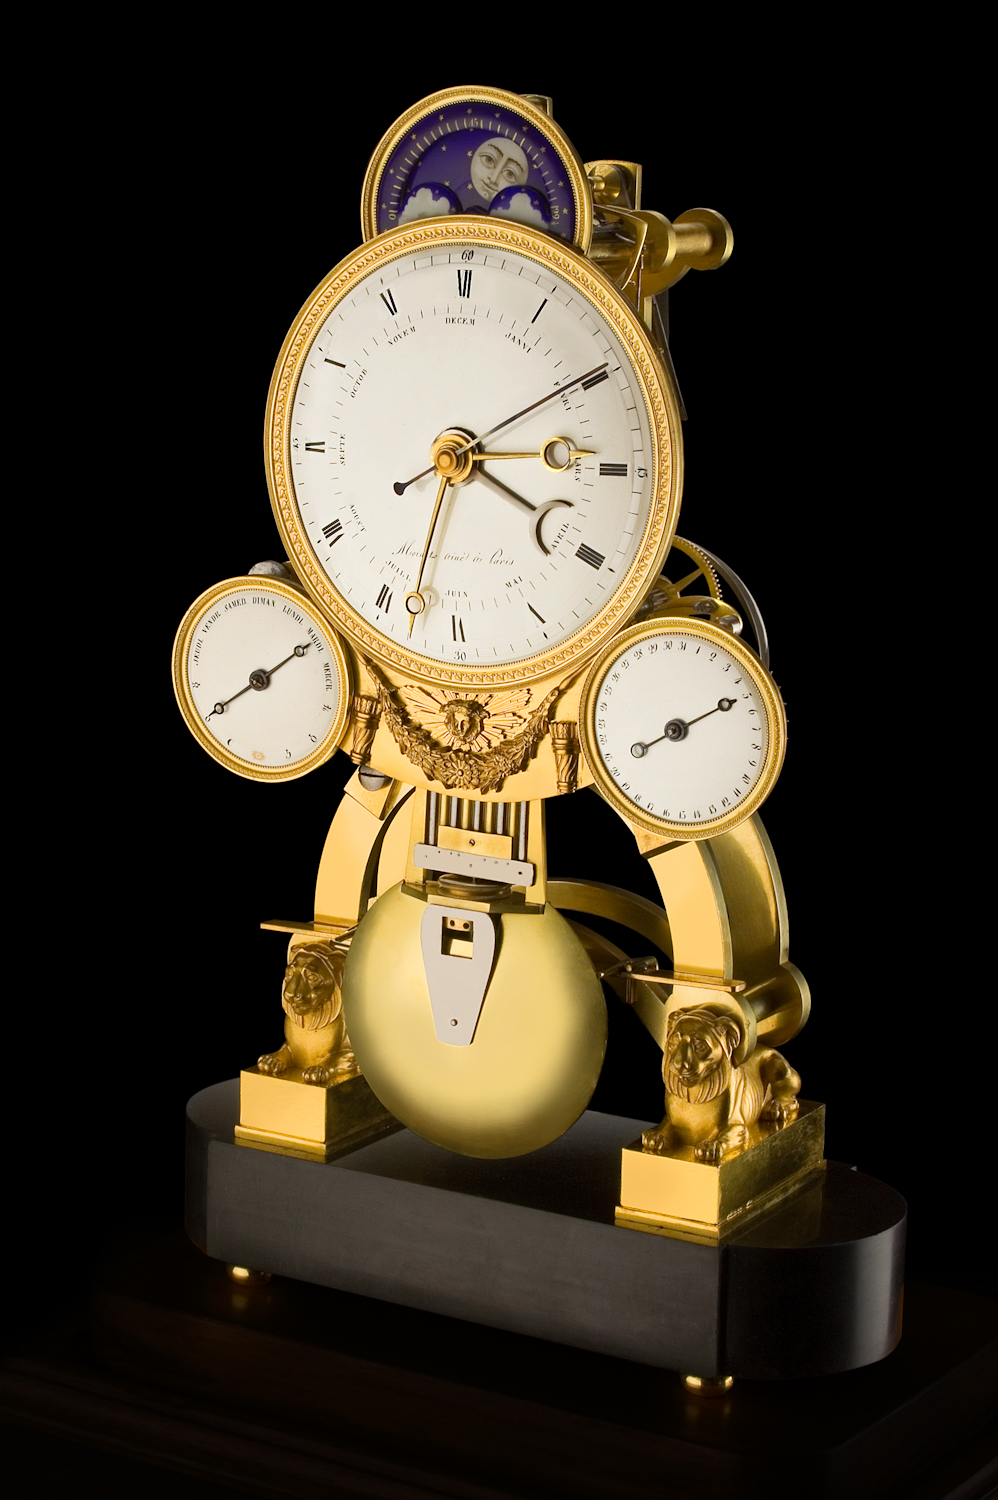 Louis Moinet zegar Króla Neapolu ok 1810